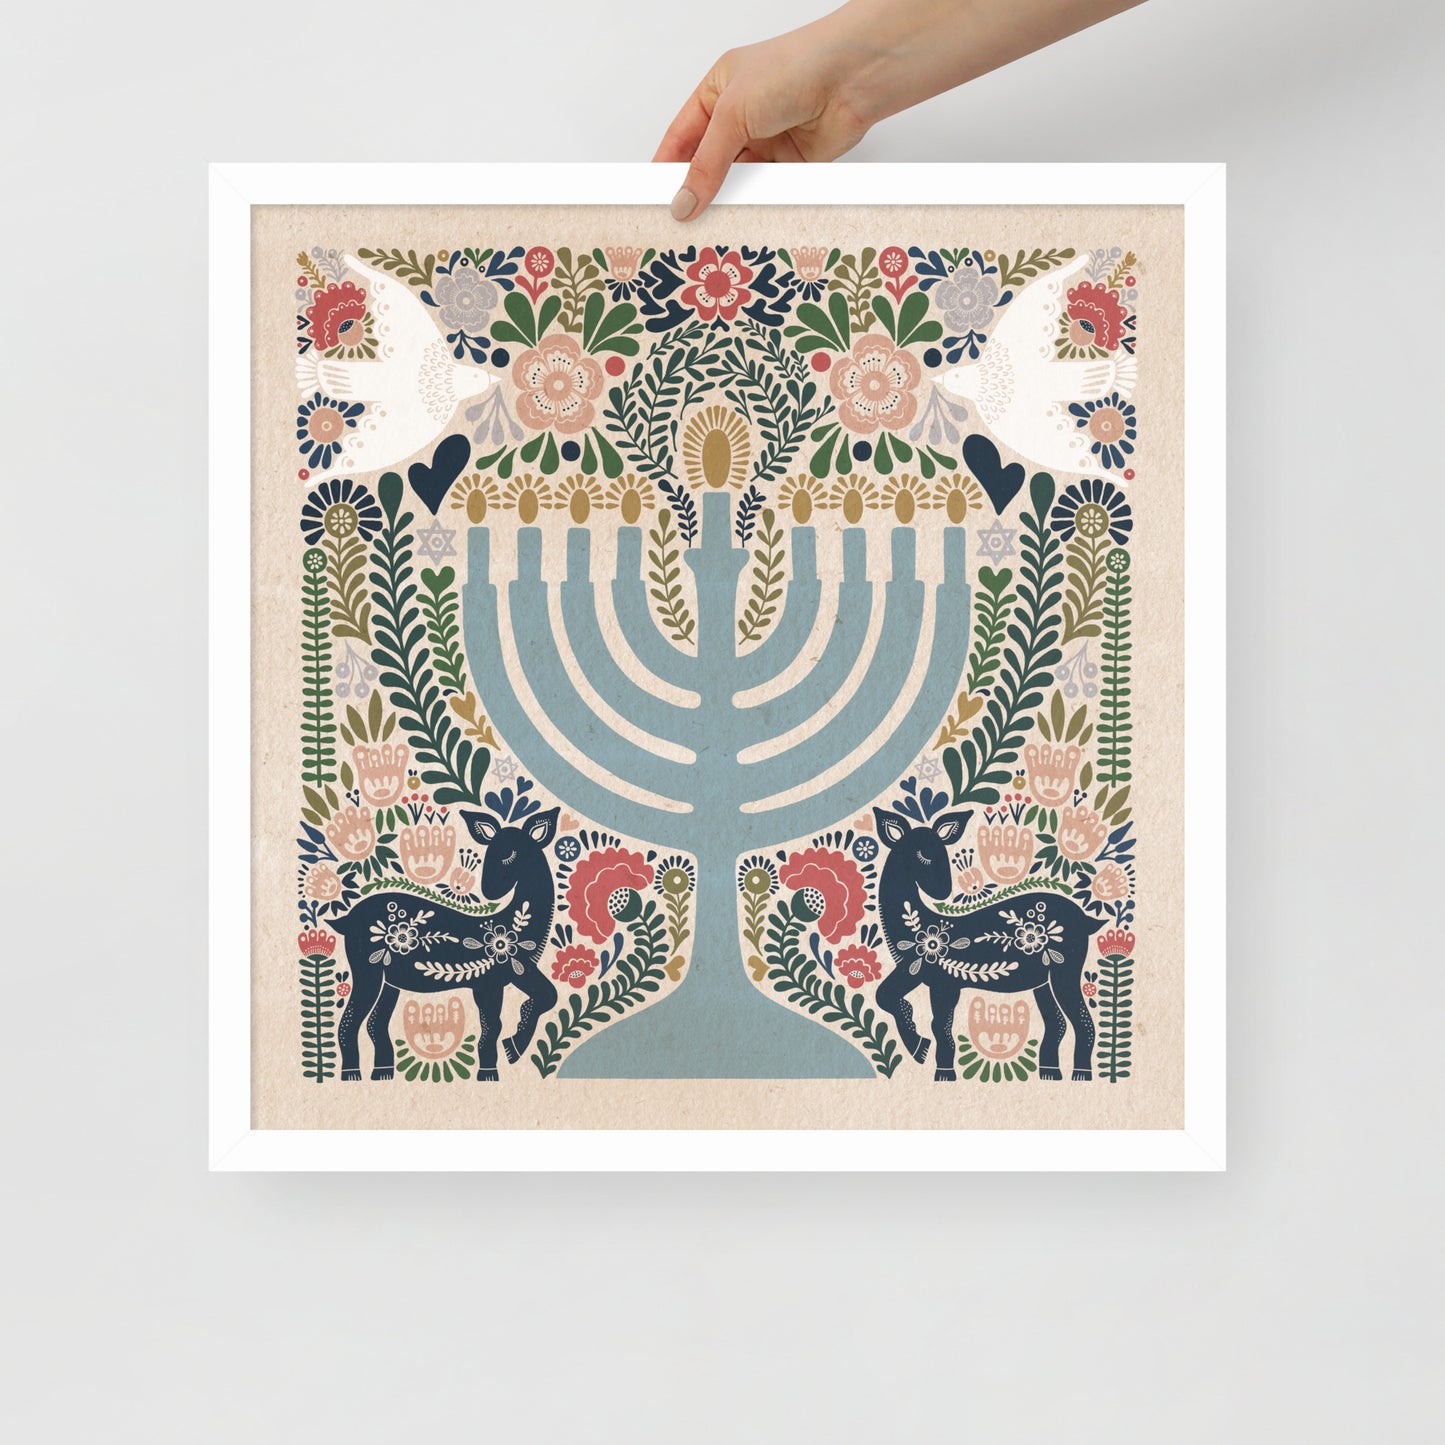 Framed Hanukkah Colorful Menorah